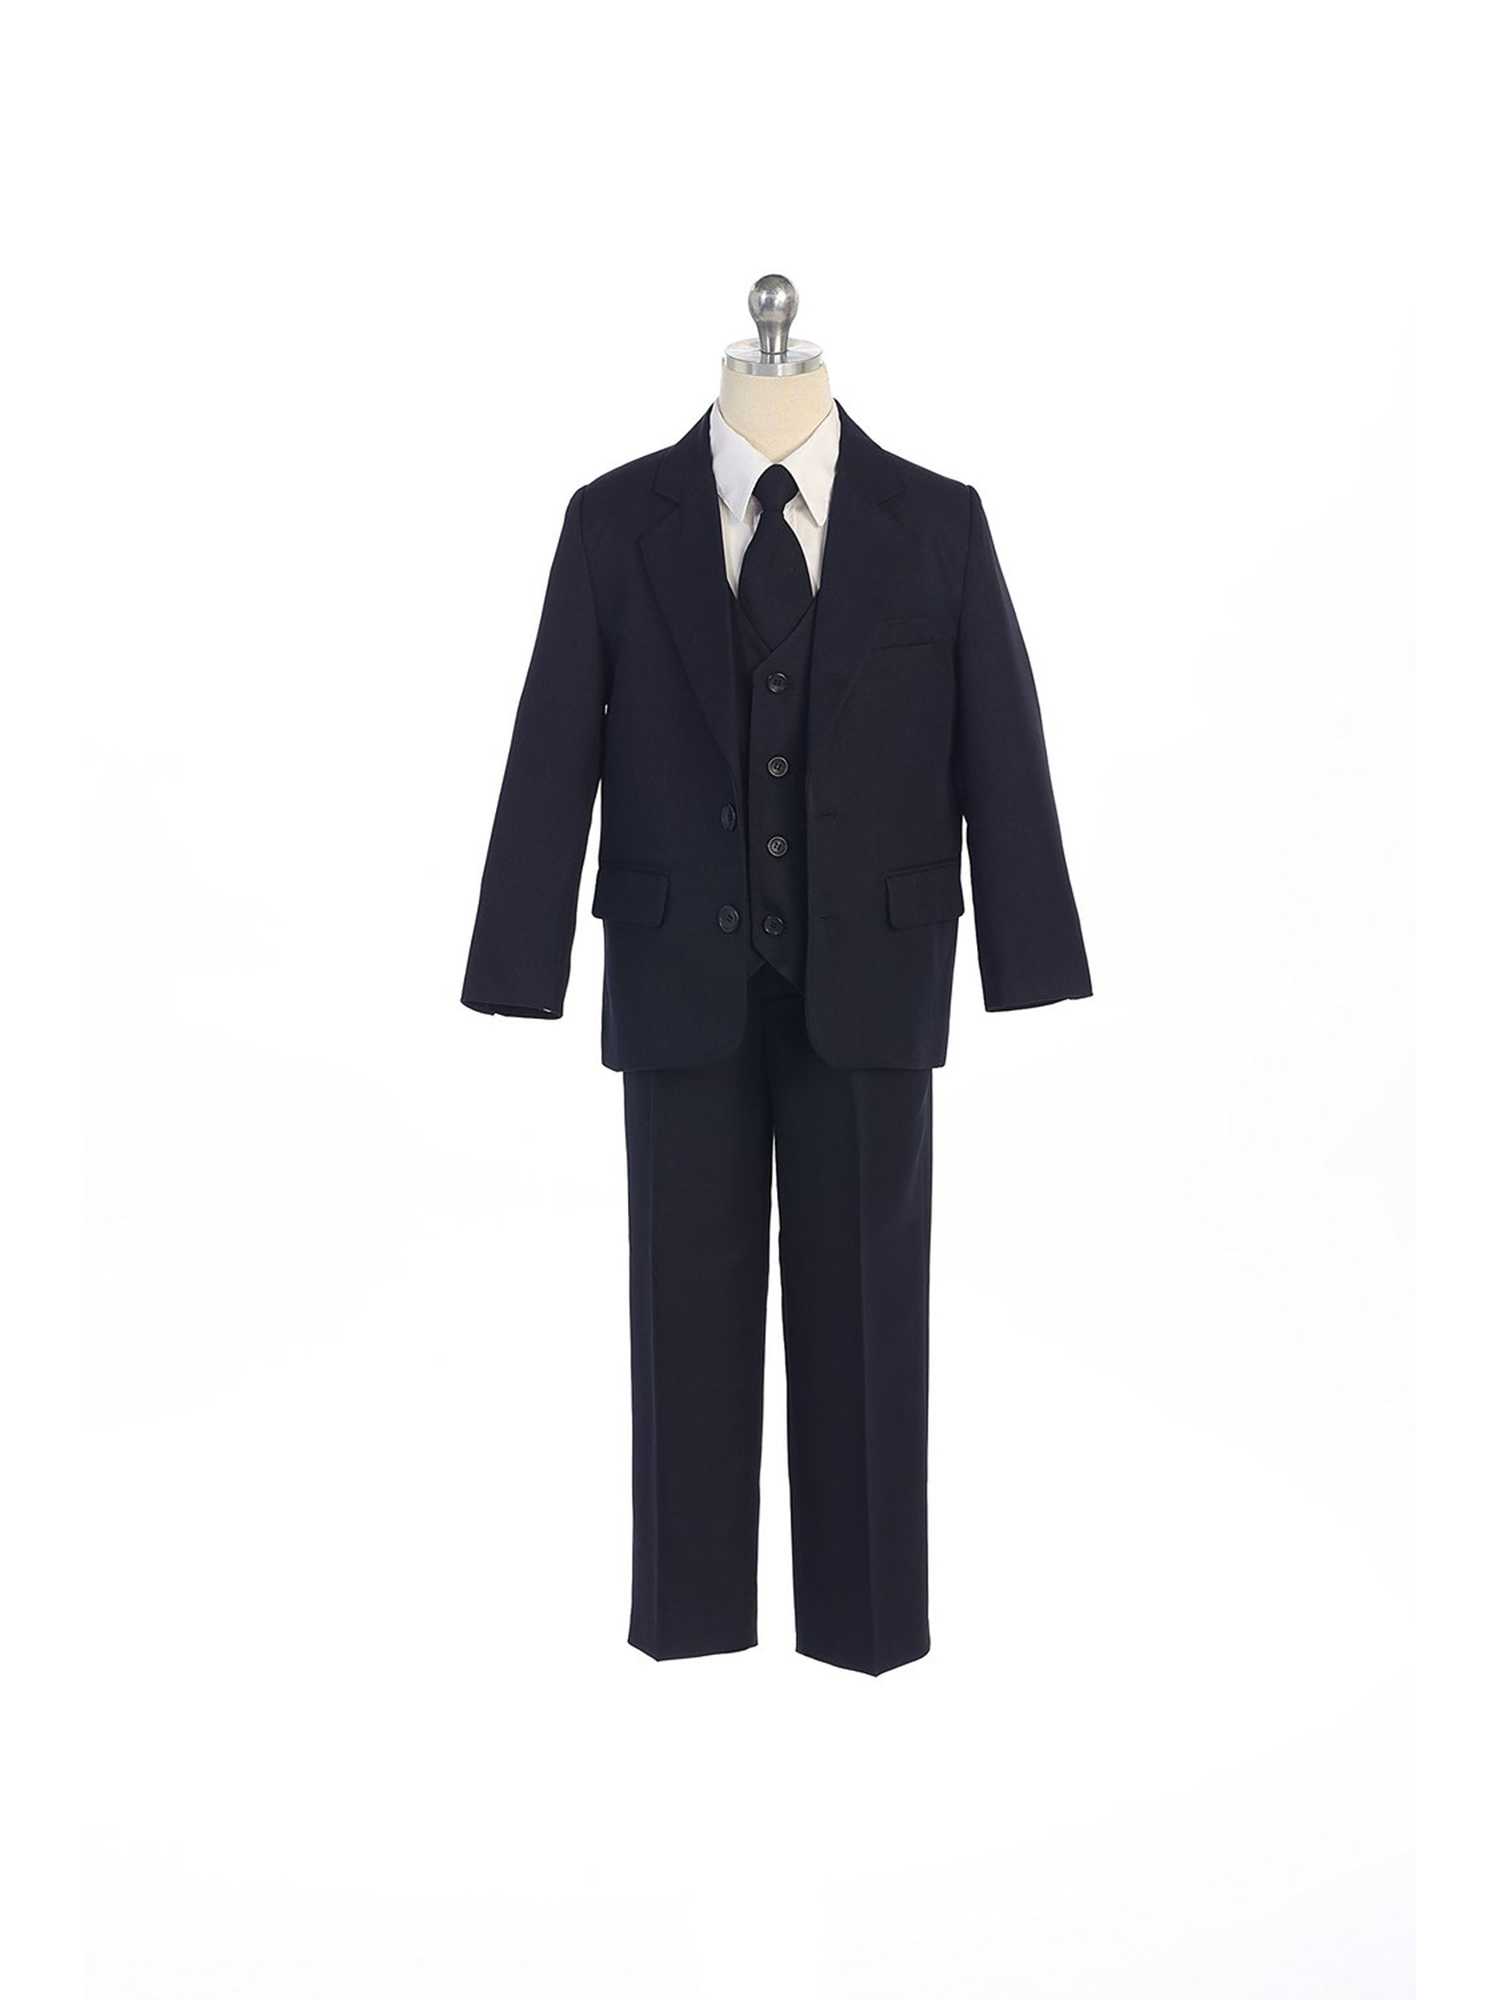 COLE Boys Suit with Shirt and Vest (5-Piece) - (10 Husky, Navy Blue)